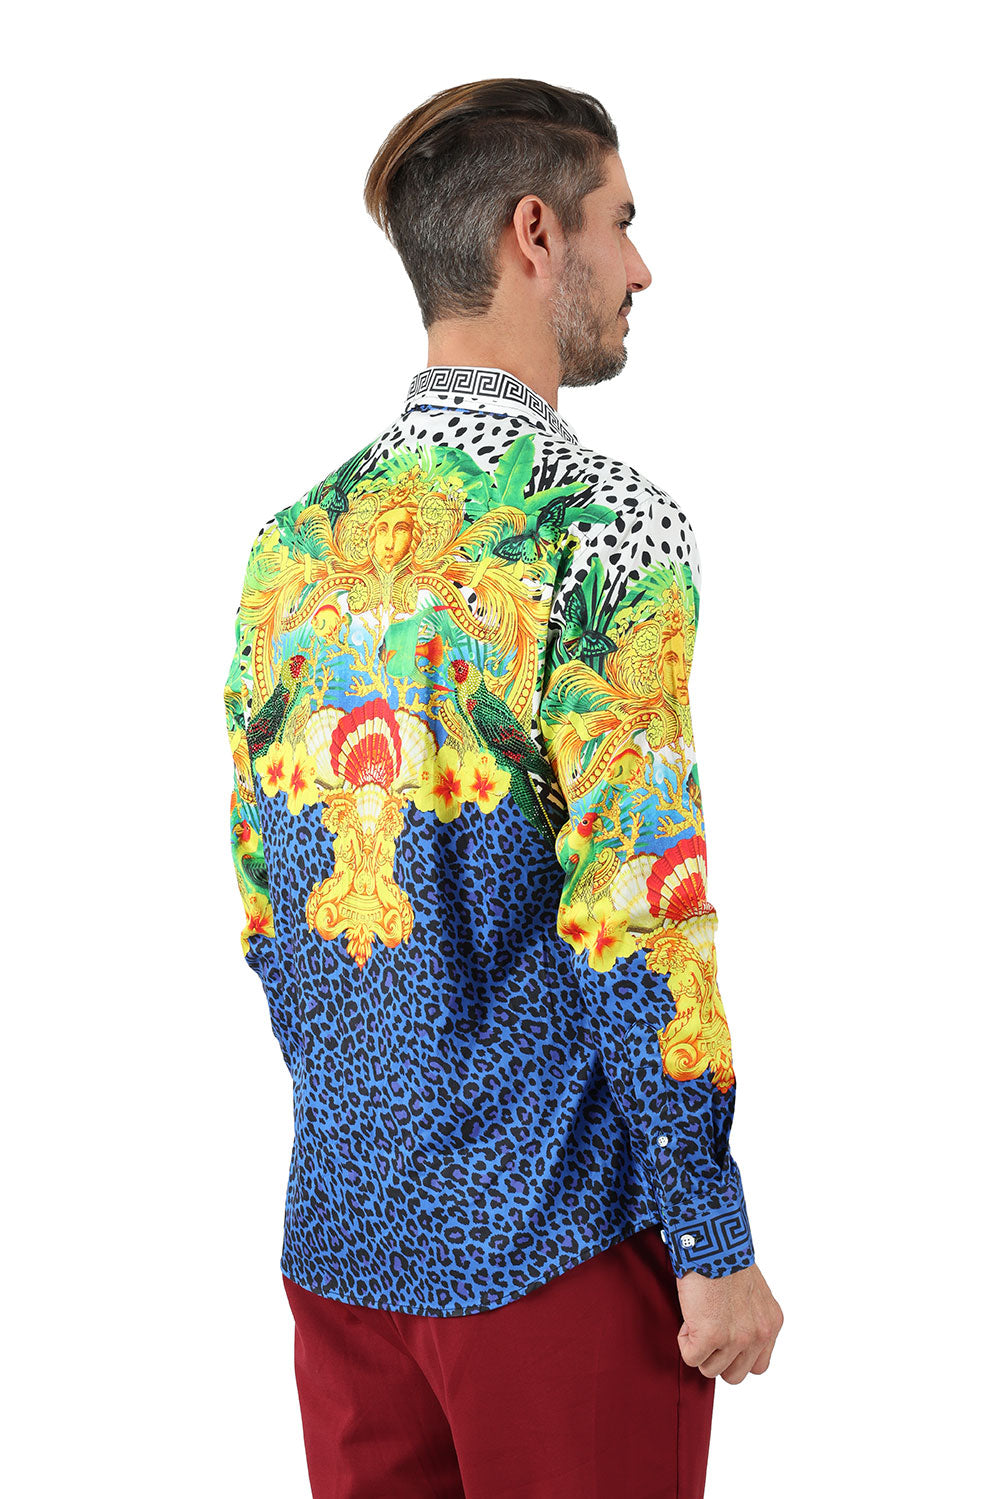 BARABAS Men's Rhinestone Printed Medusa Floral Leopard Shirts SPR230 Blue